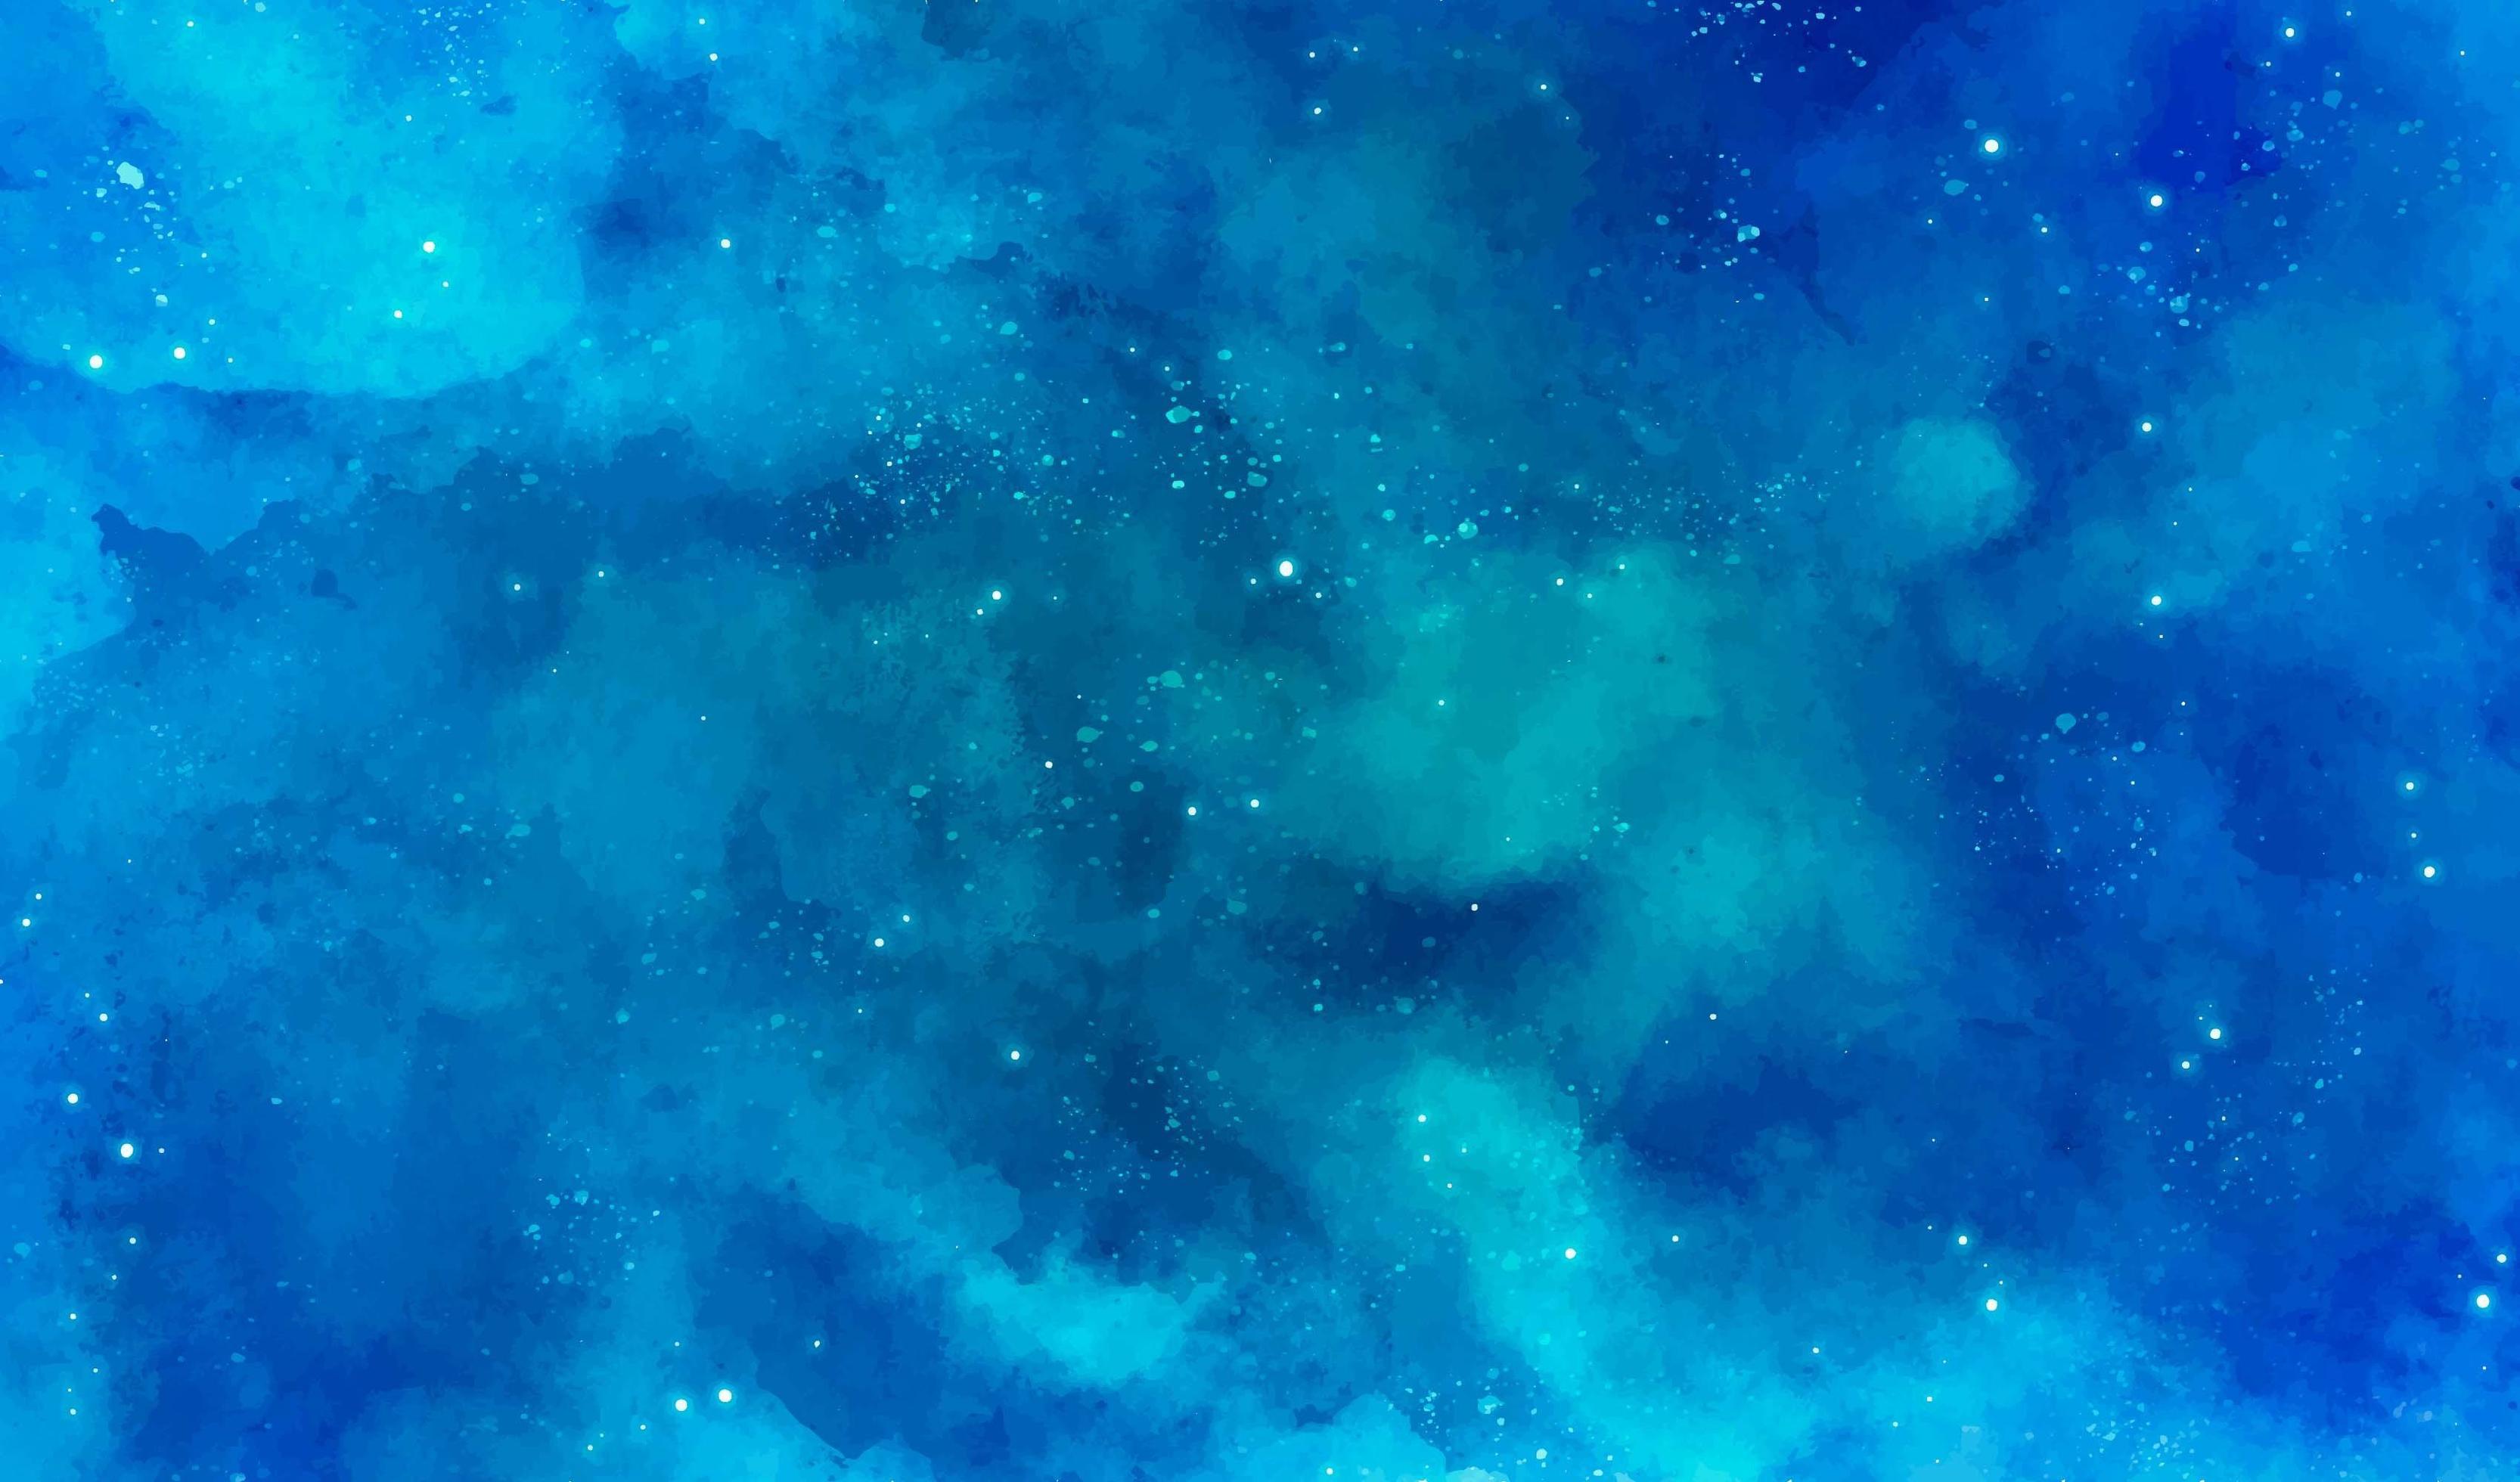 Mistic Blue Galaxy Watercolor Texture Vector Art At Vecteezy